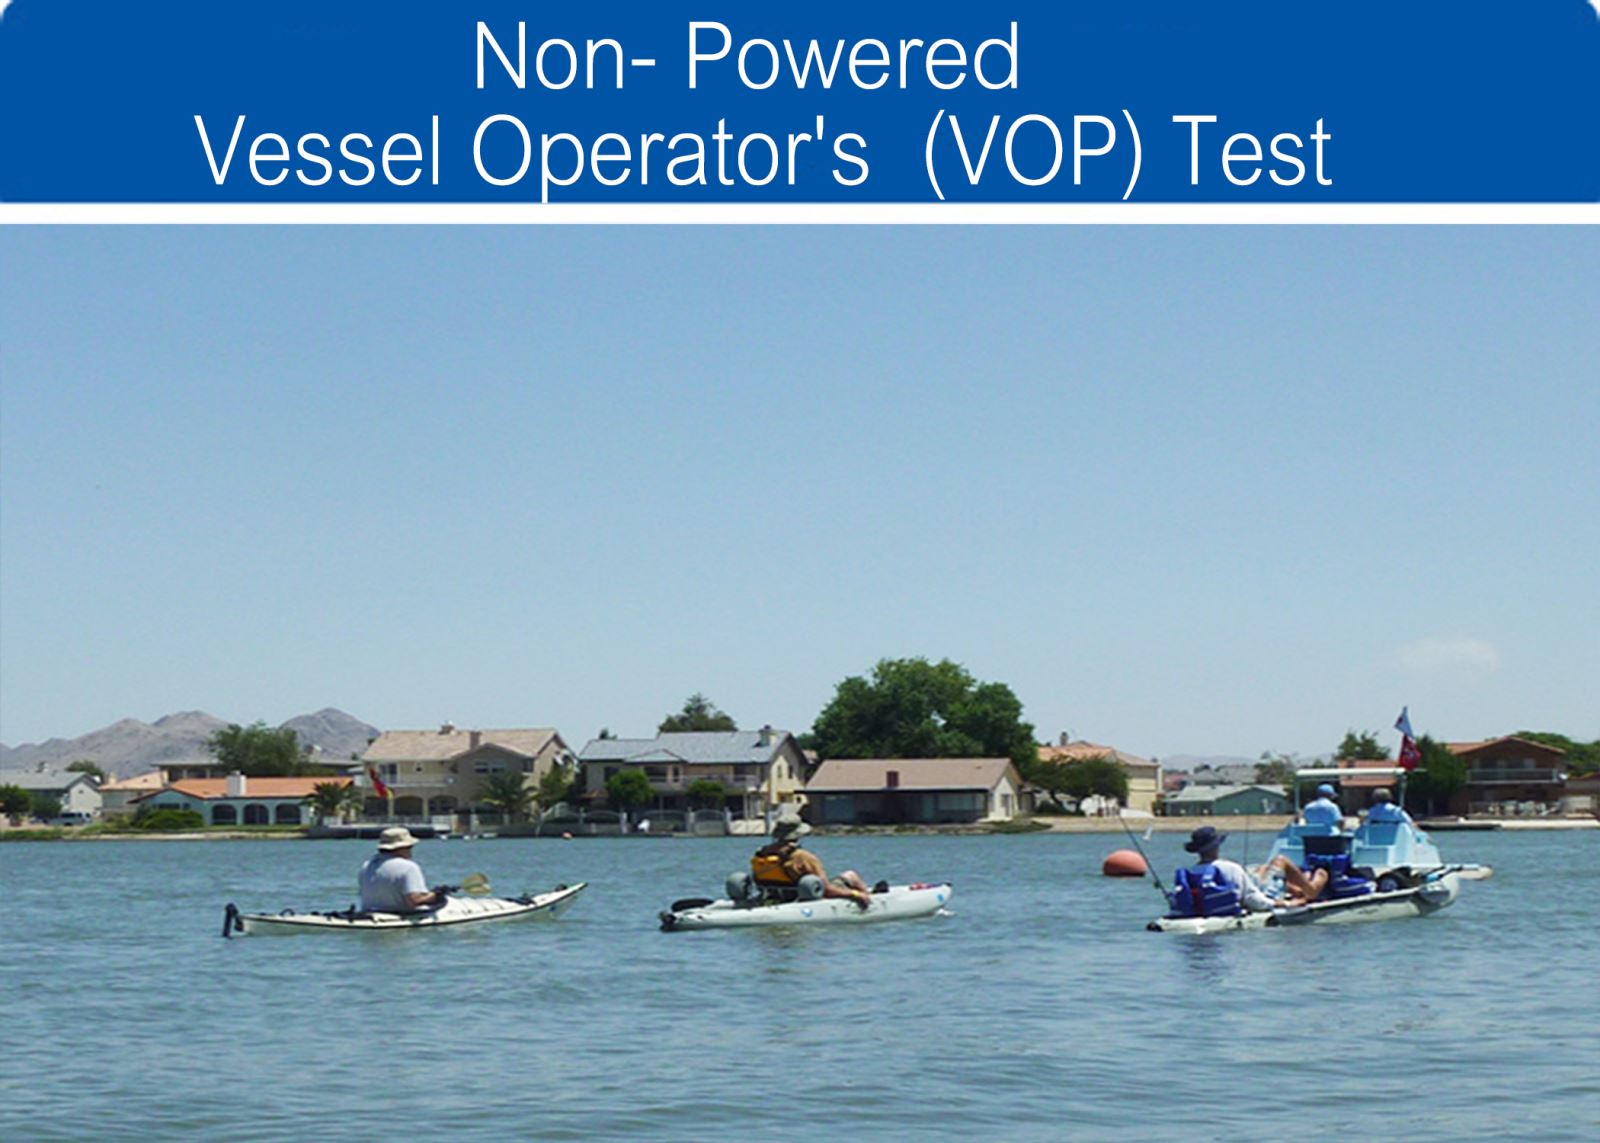 Non-powered Vessel Operator's (VOP) Test